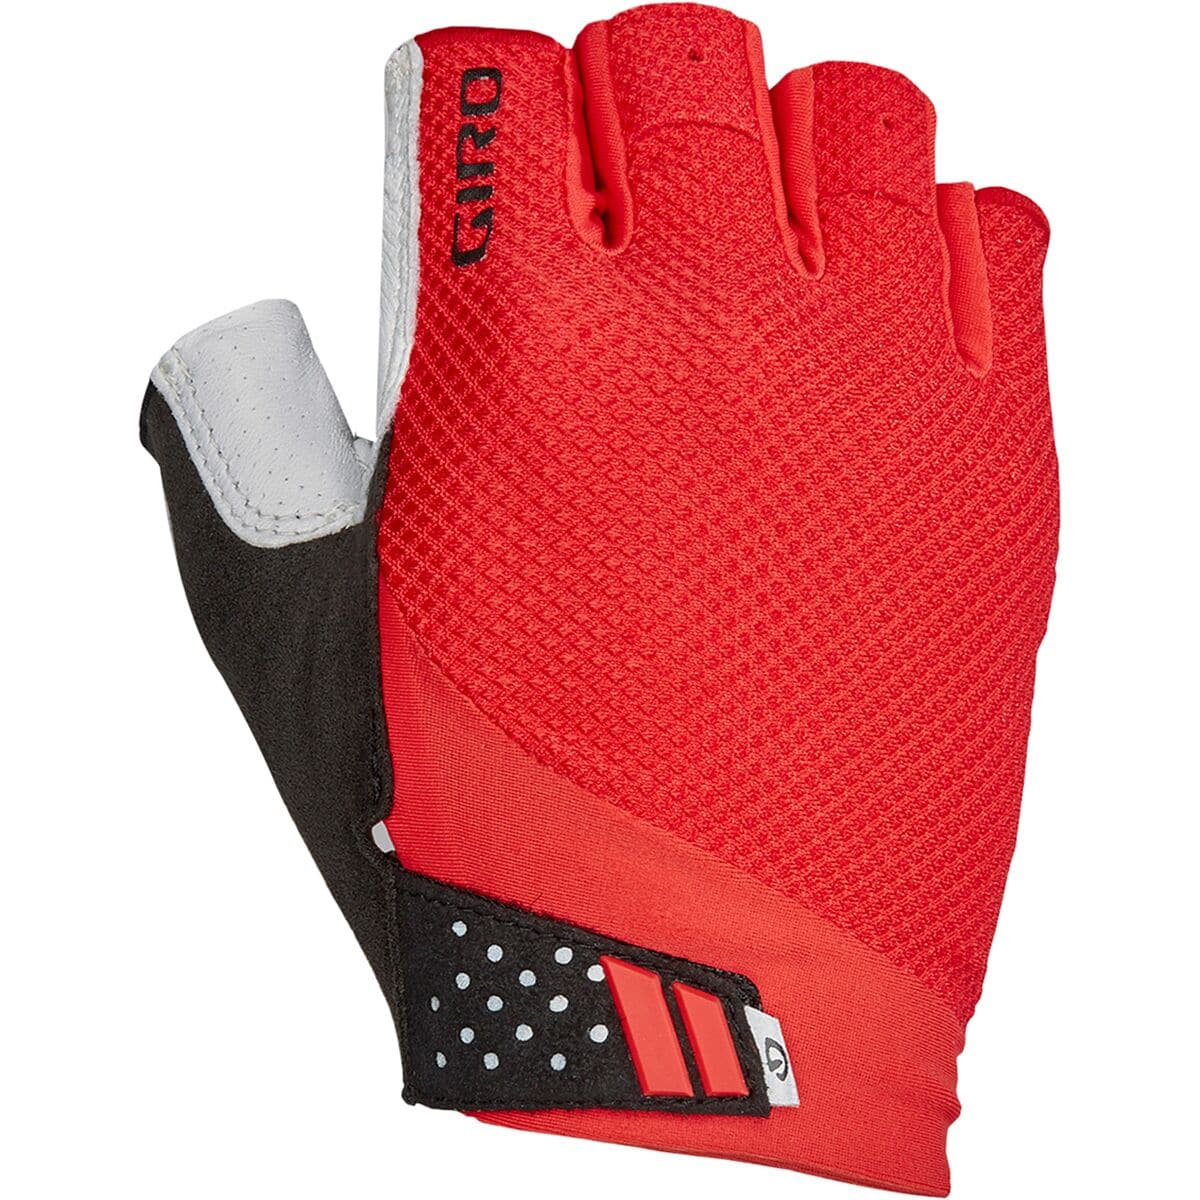 Giro Monaco II Gel Glove - Men's